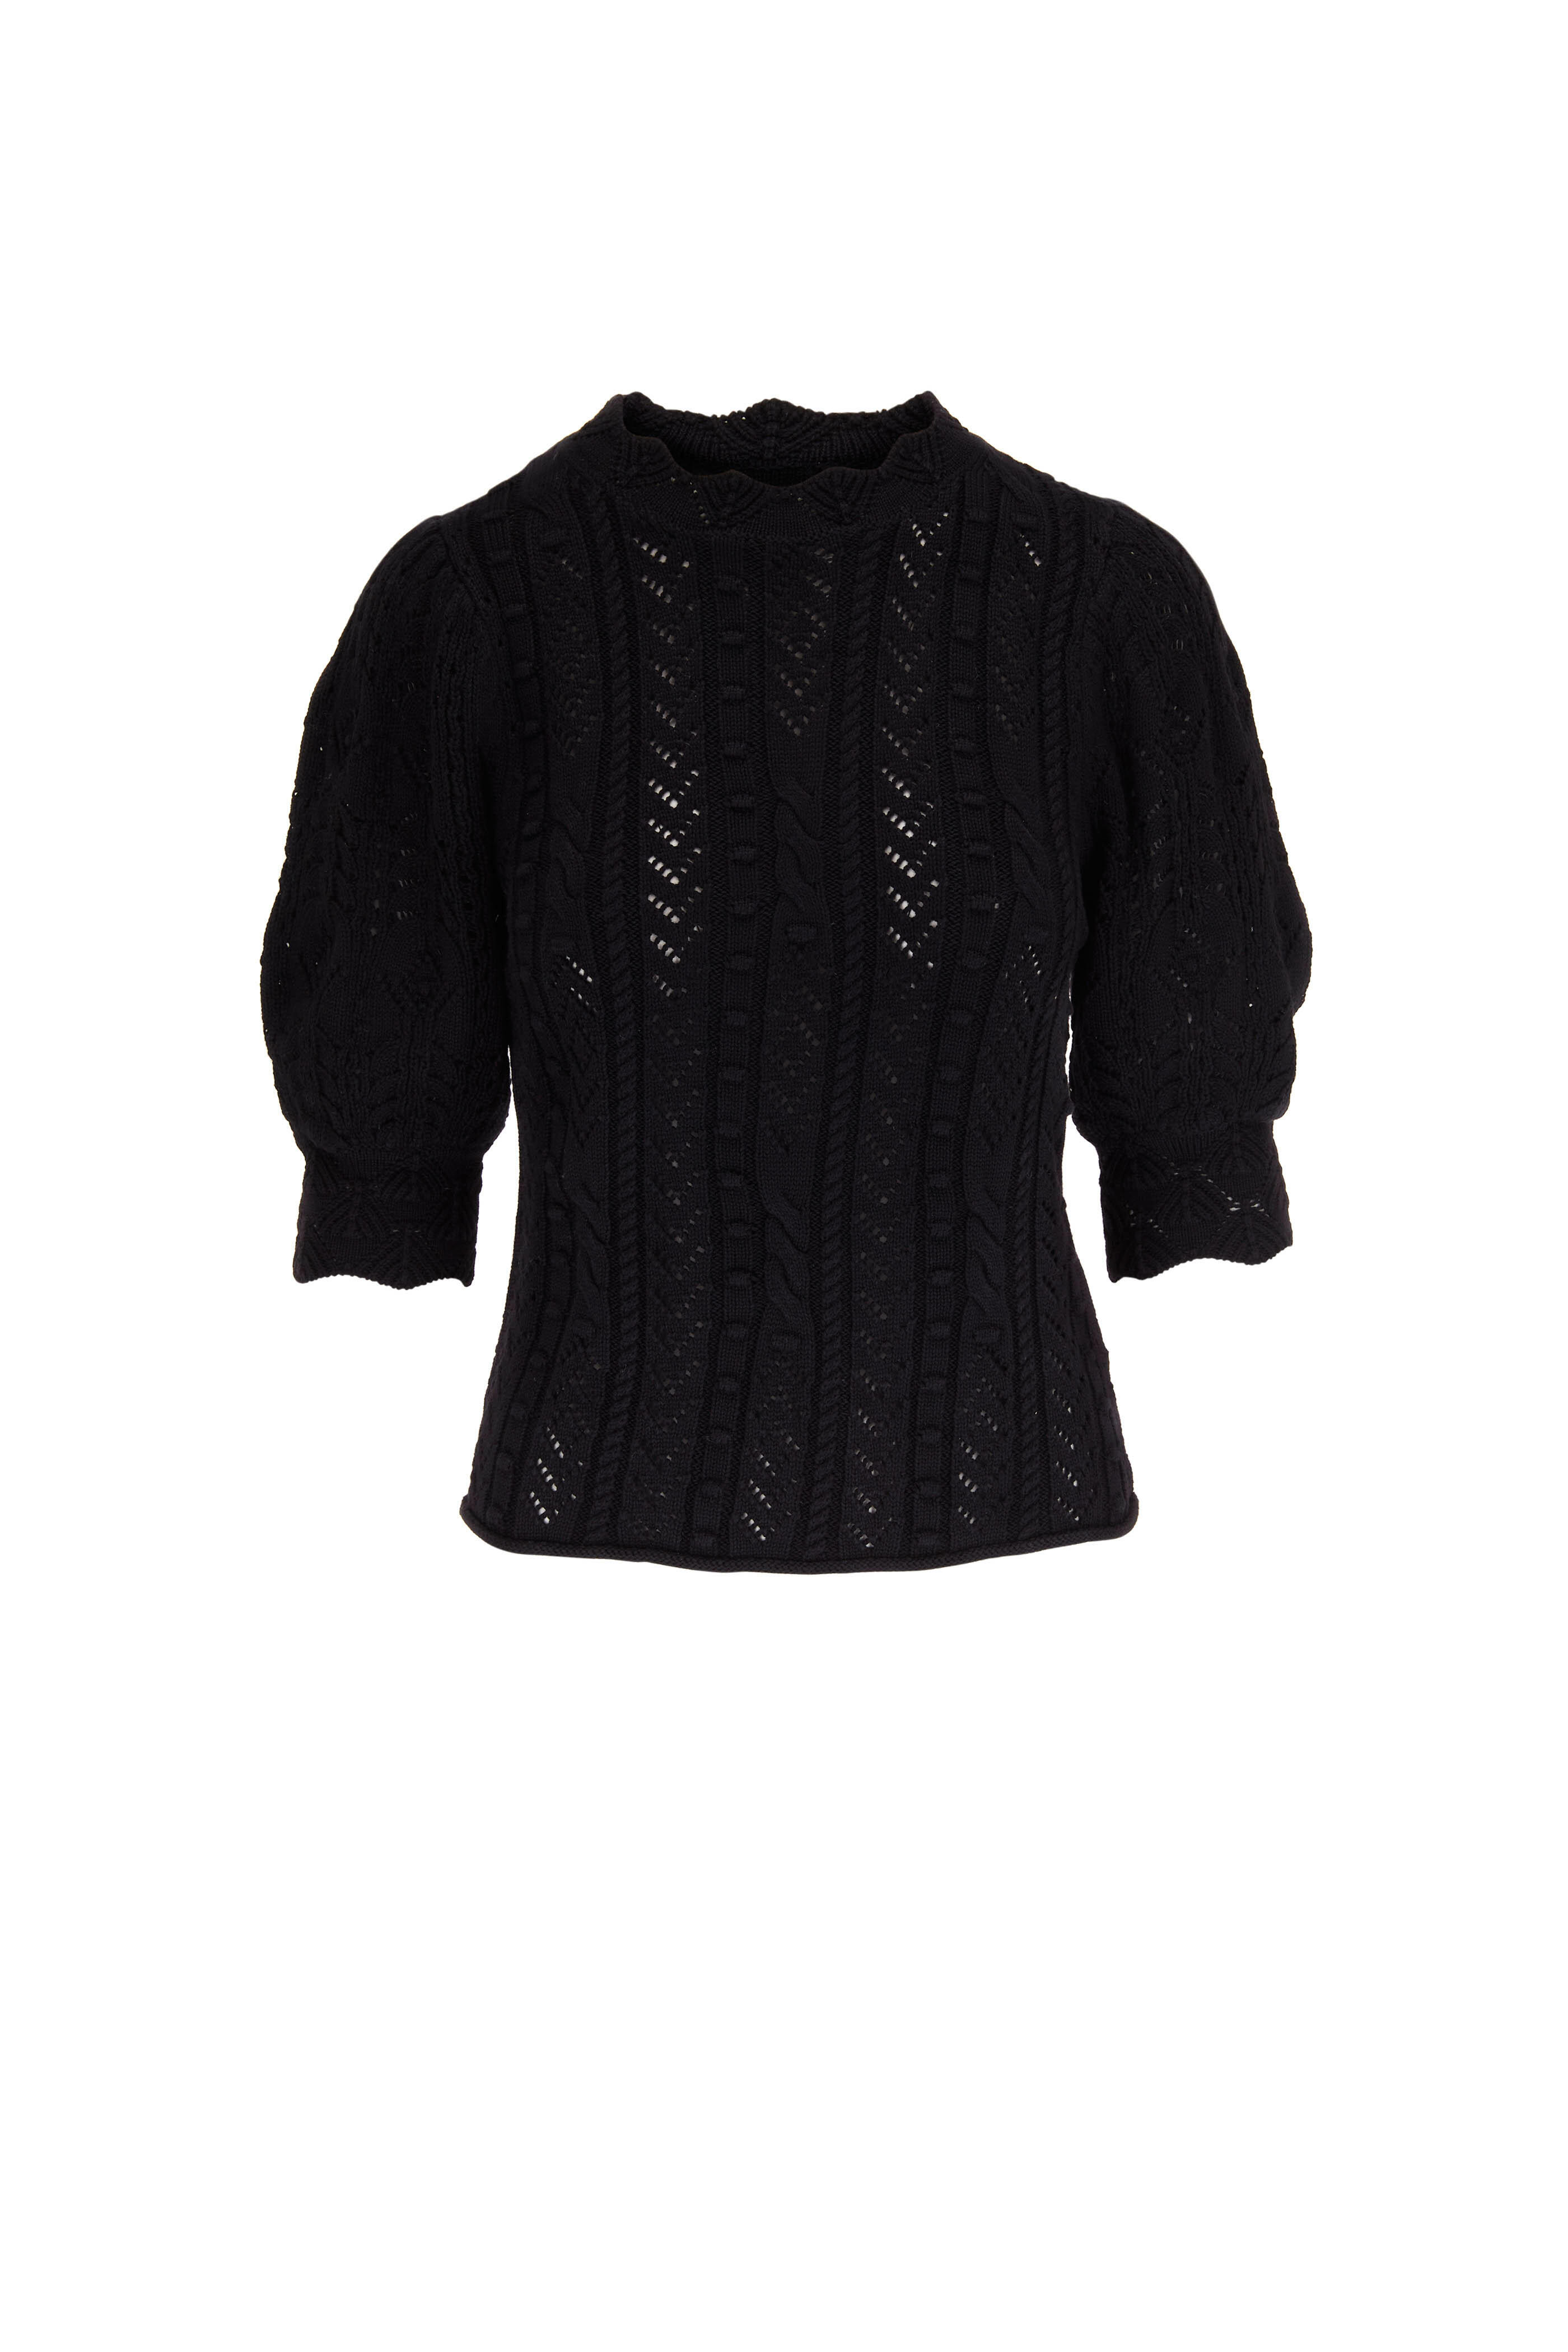 &Isla - Rosie Black Short Sleeve Cable Crew Sweater